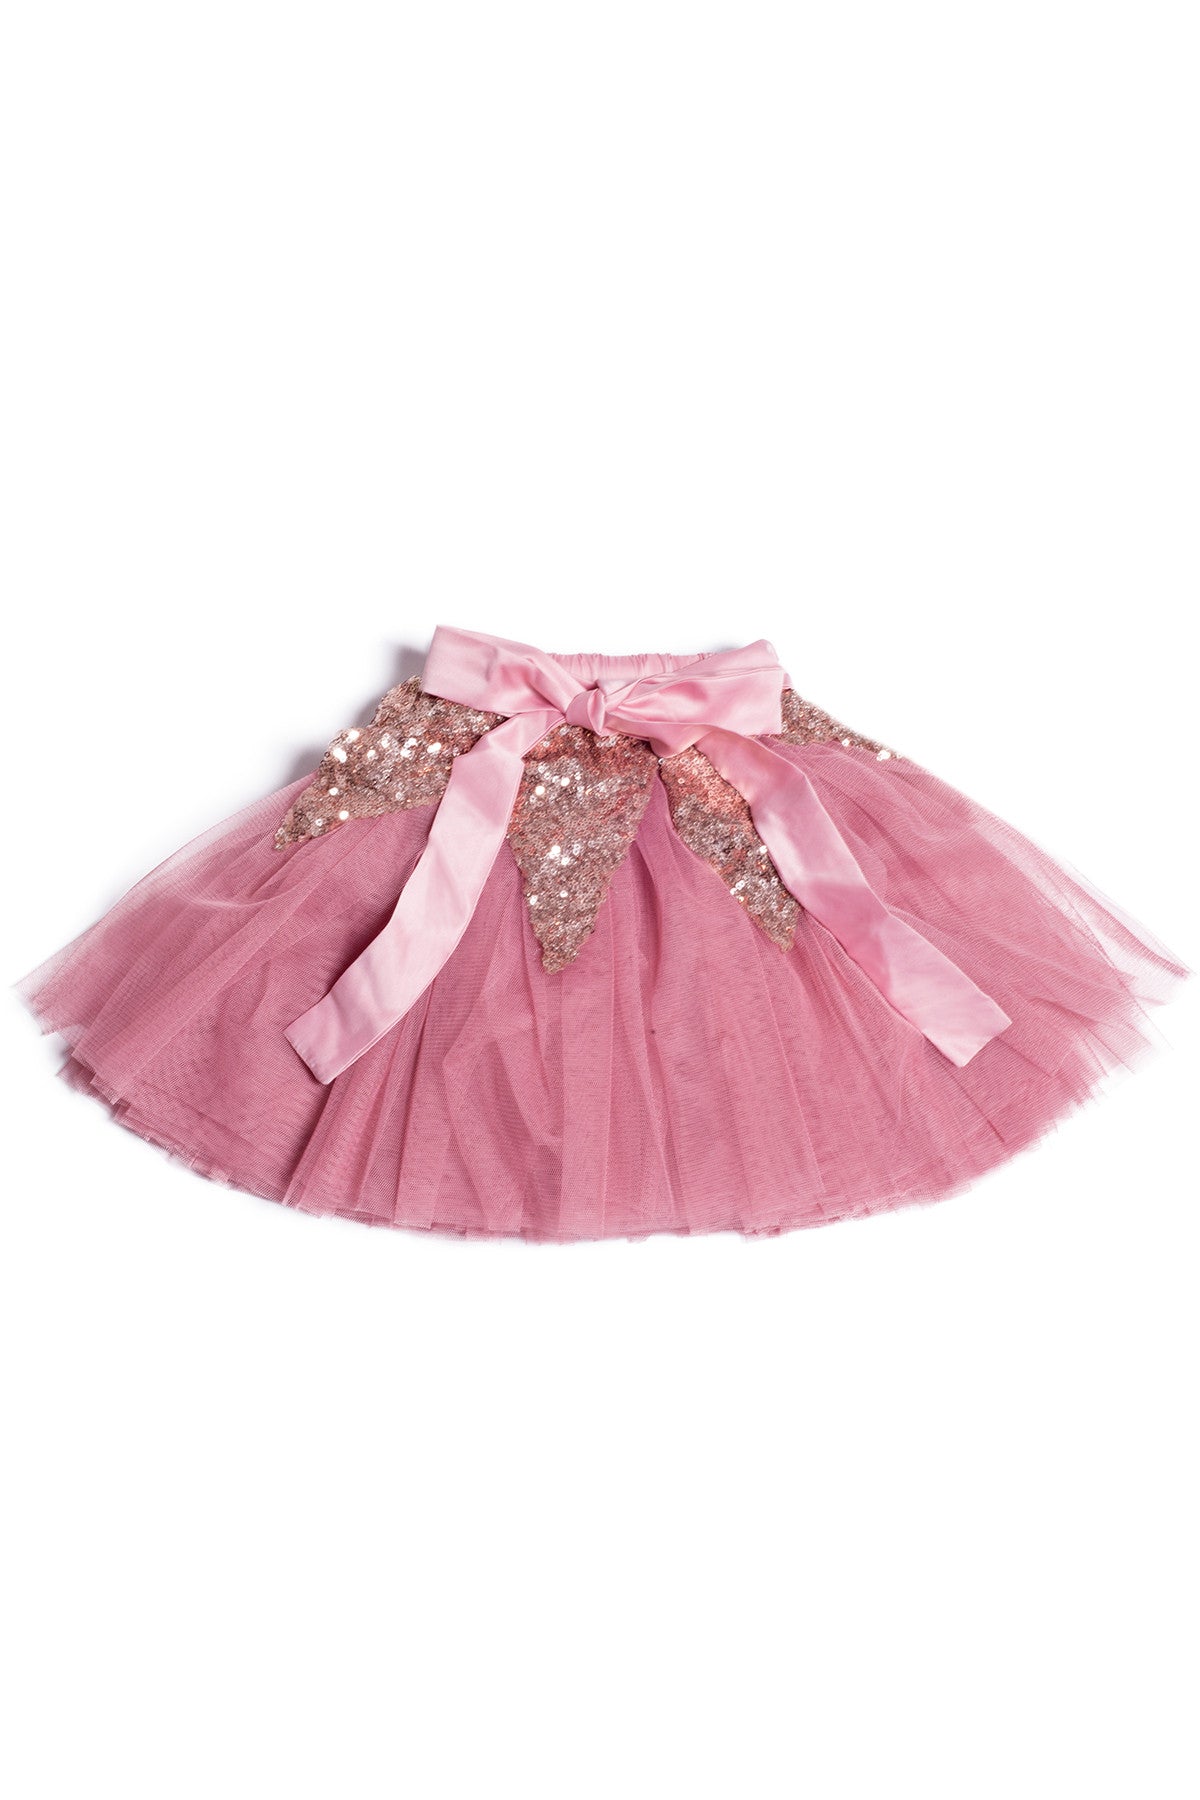 SEQUIN tutu skirt . pink and cream